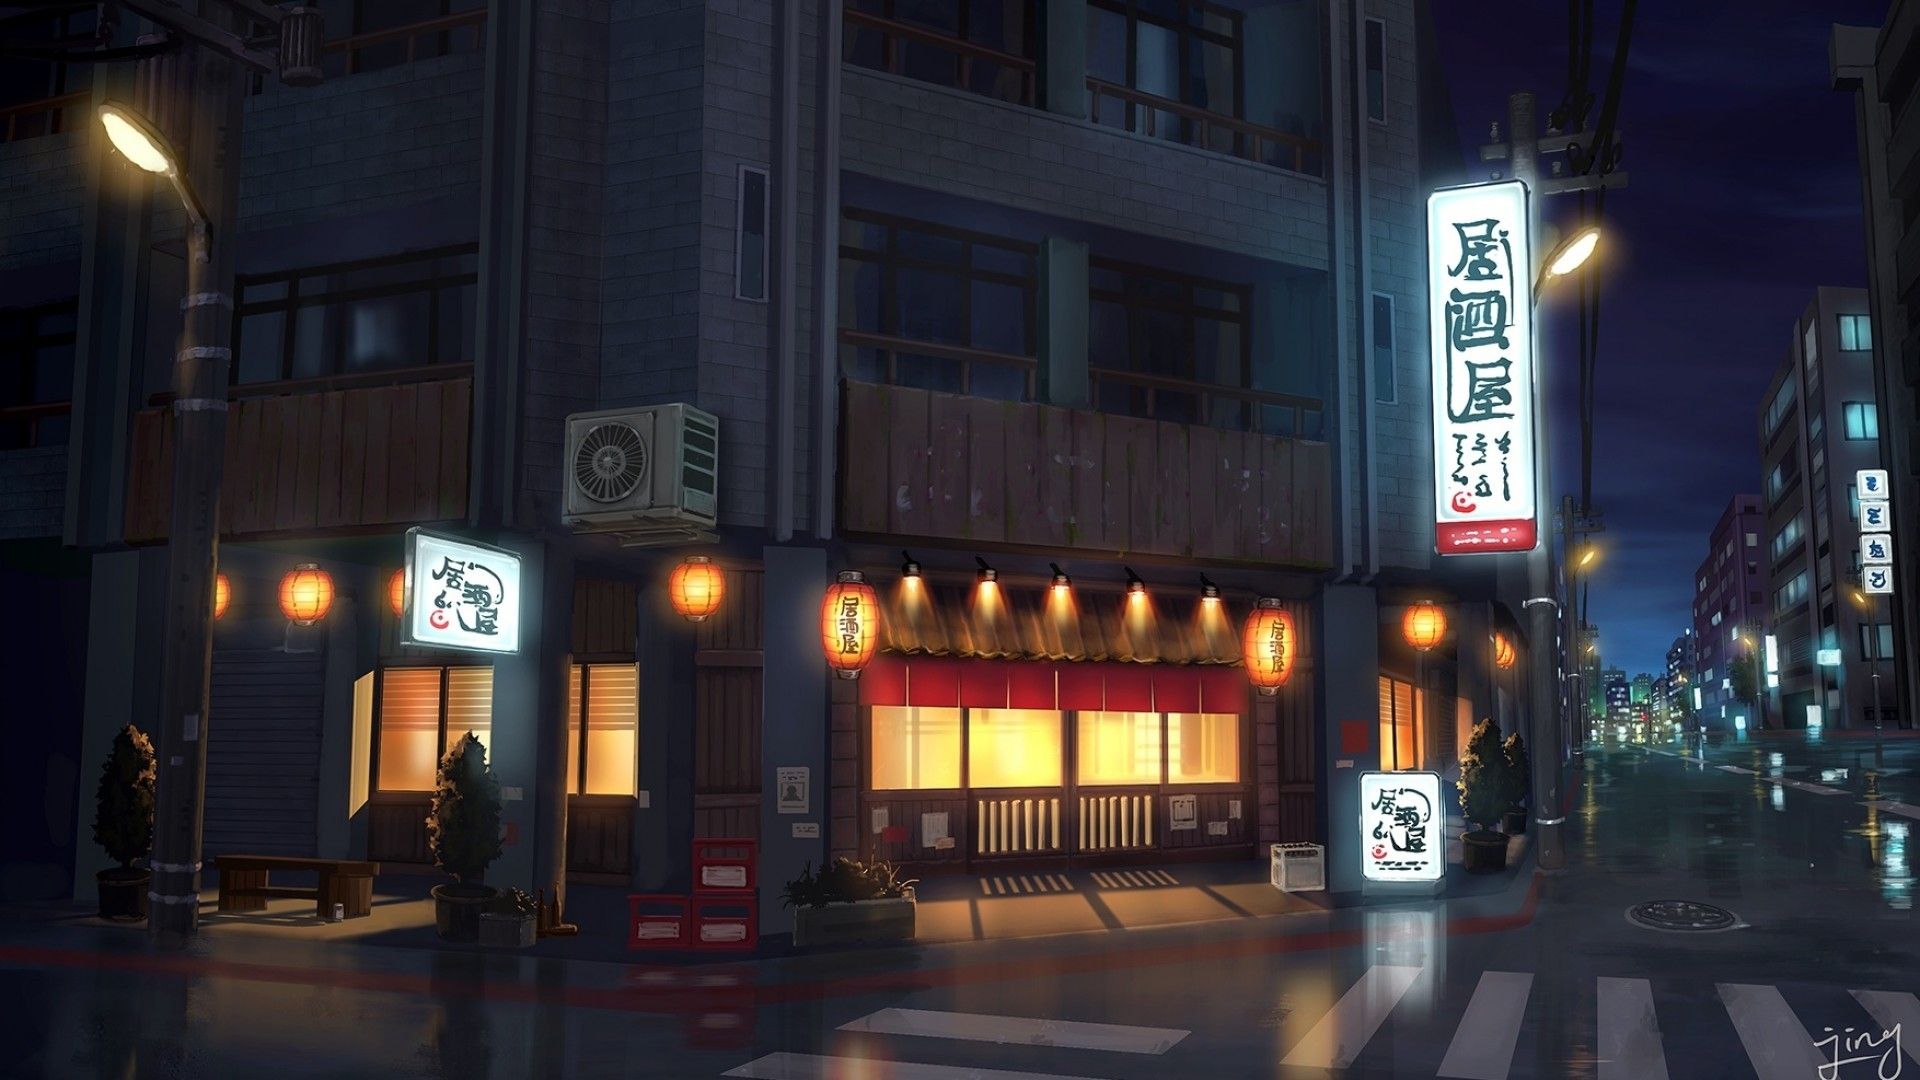 Anime Street - Other & Anime Background Wallpapers on Desktop Nexus (Image  2004047)